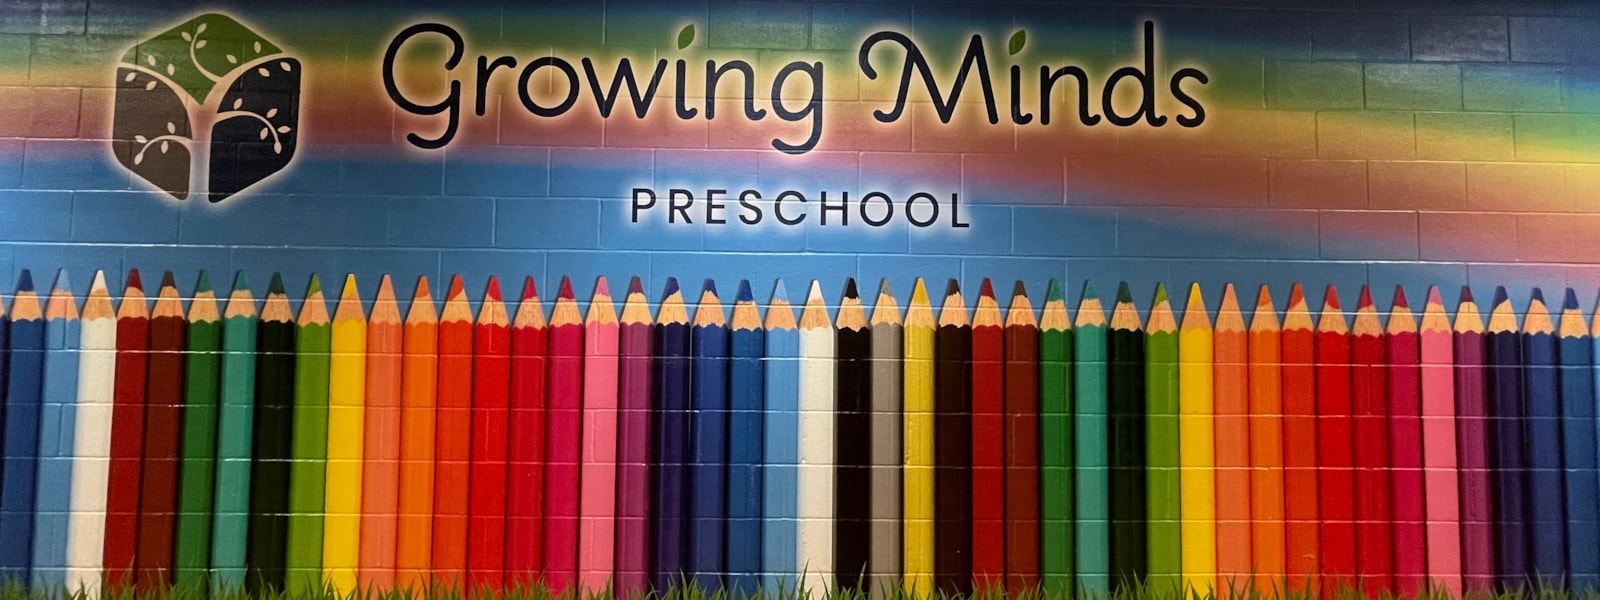 Coloring pencil wall